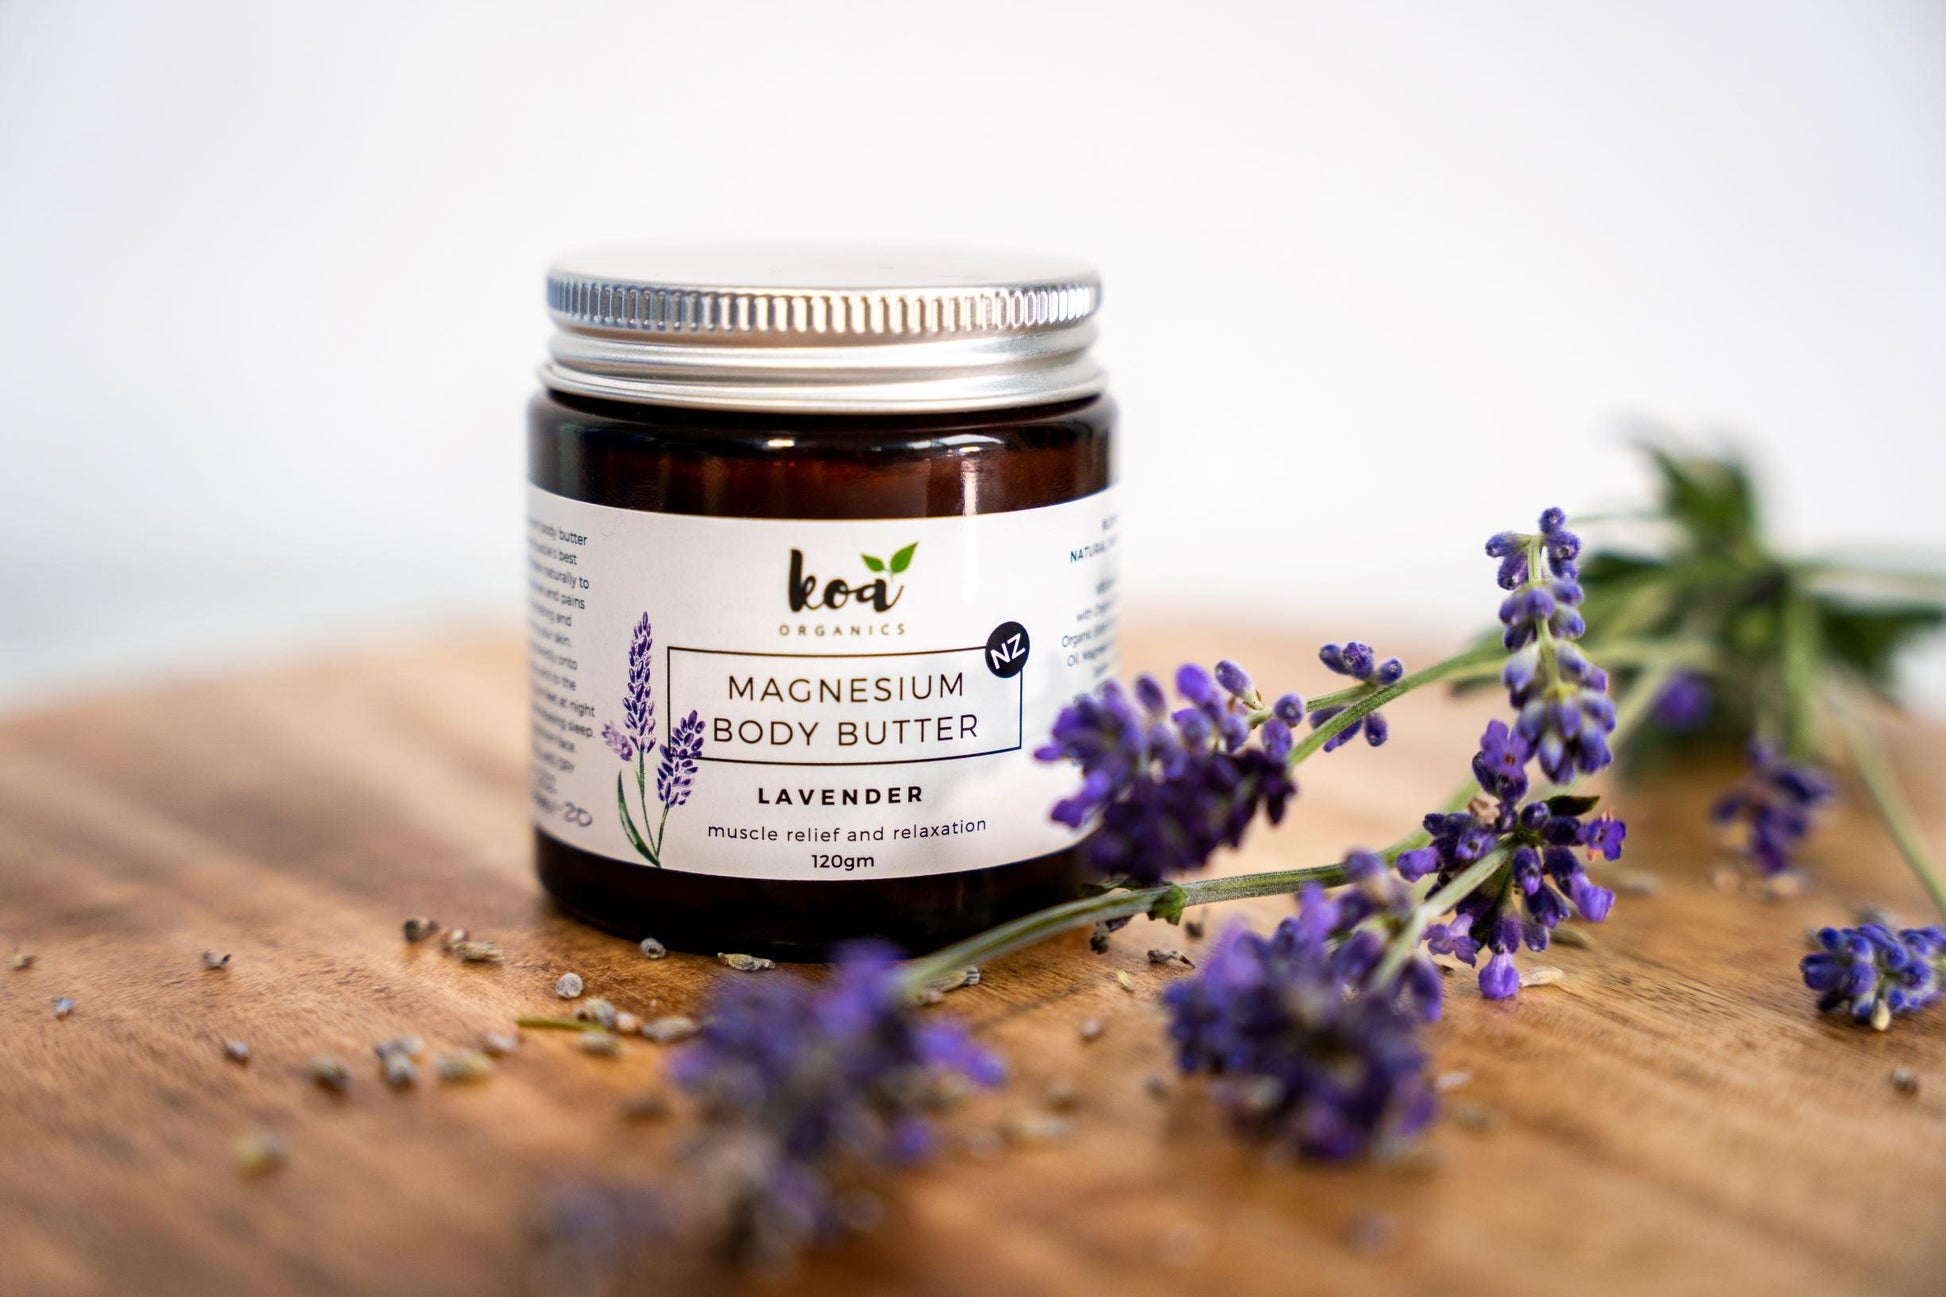 Koa Organics | Magnesium Body Butter with Lavender - Yoho Baby & co.